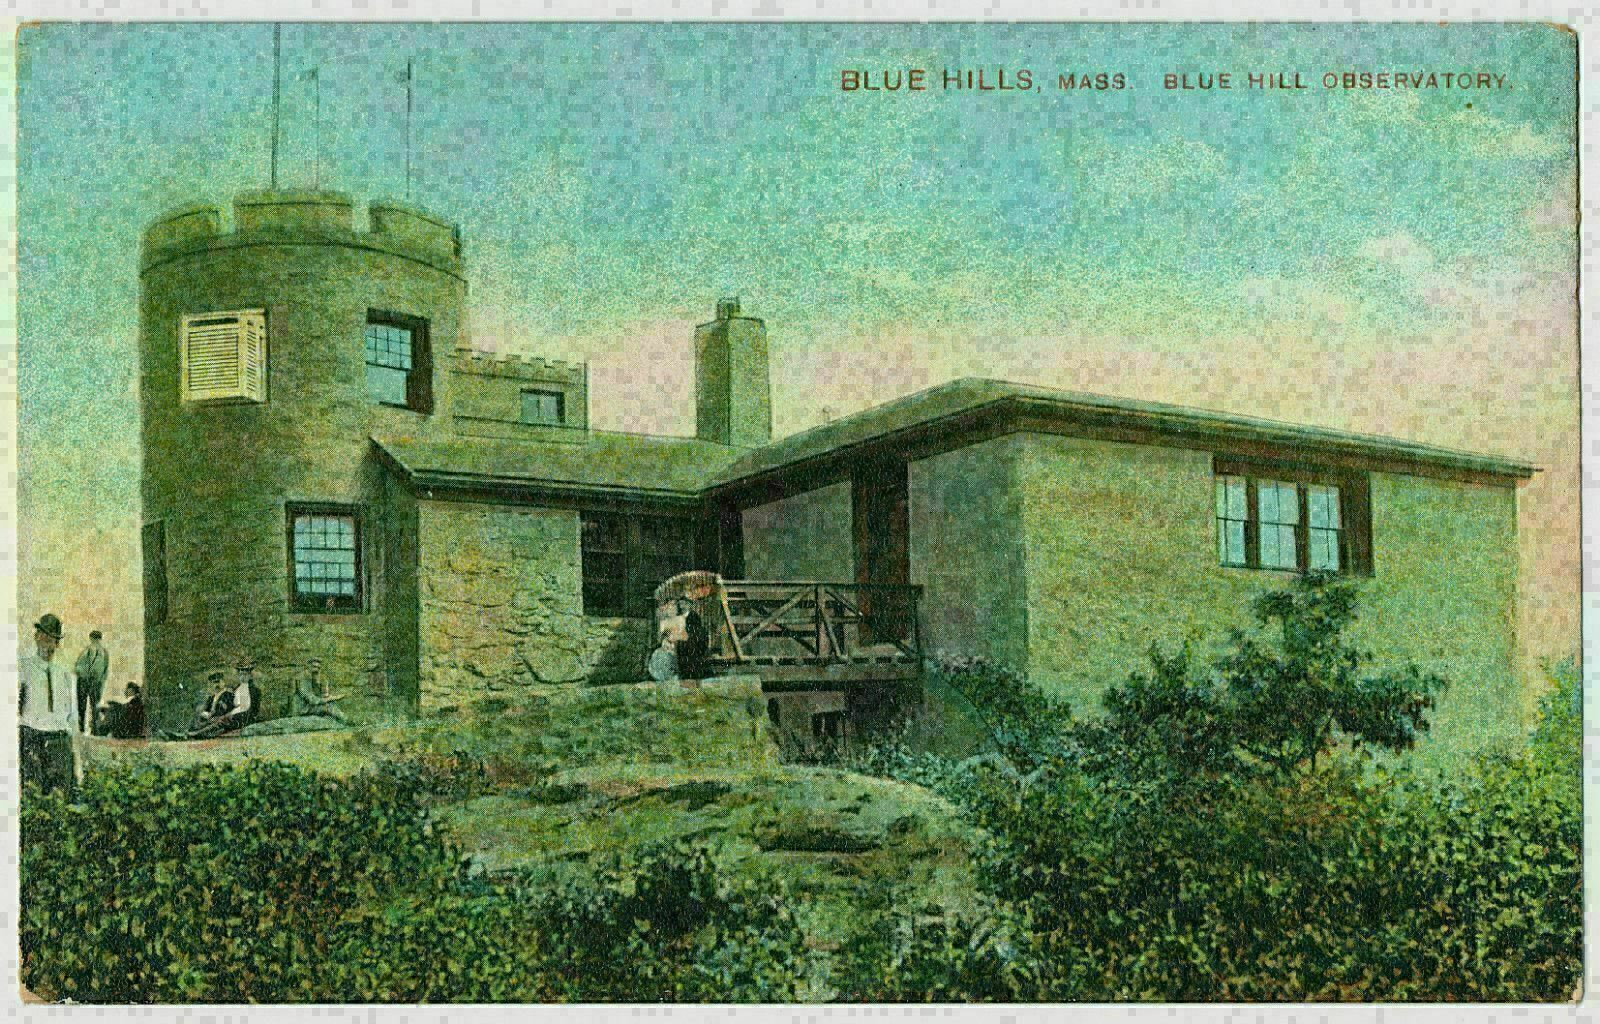 Blue Hill Observatory, Blue Hills, Massachusetts ca. 1910